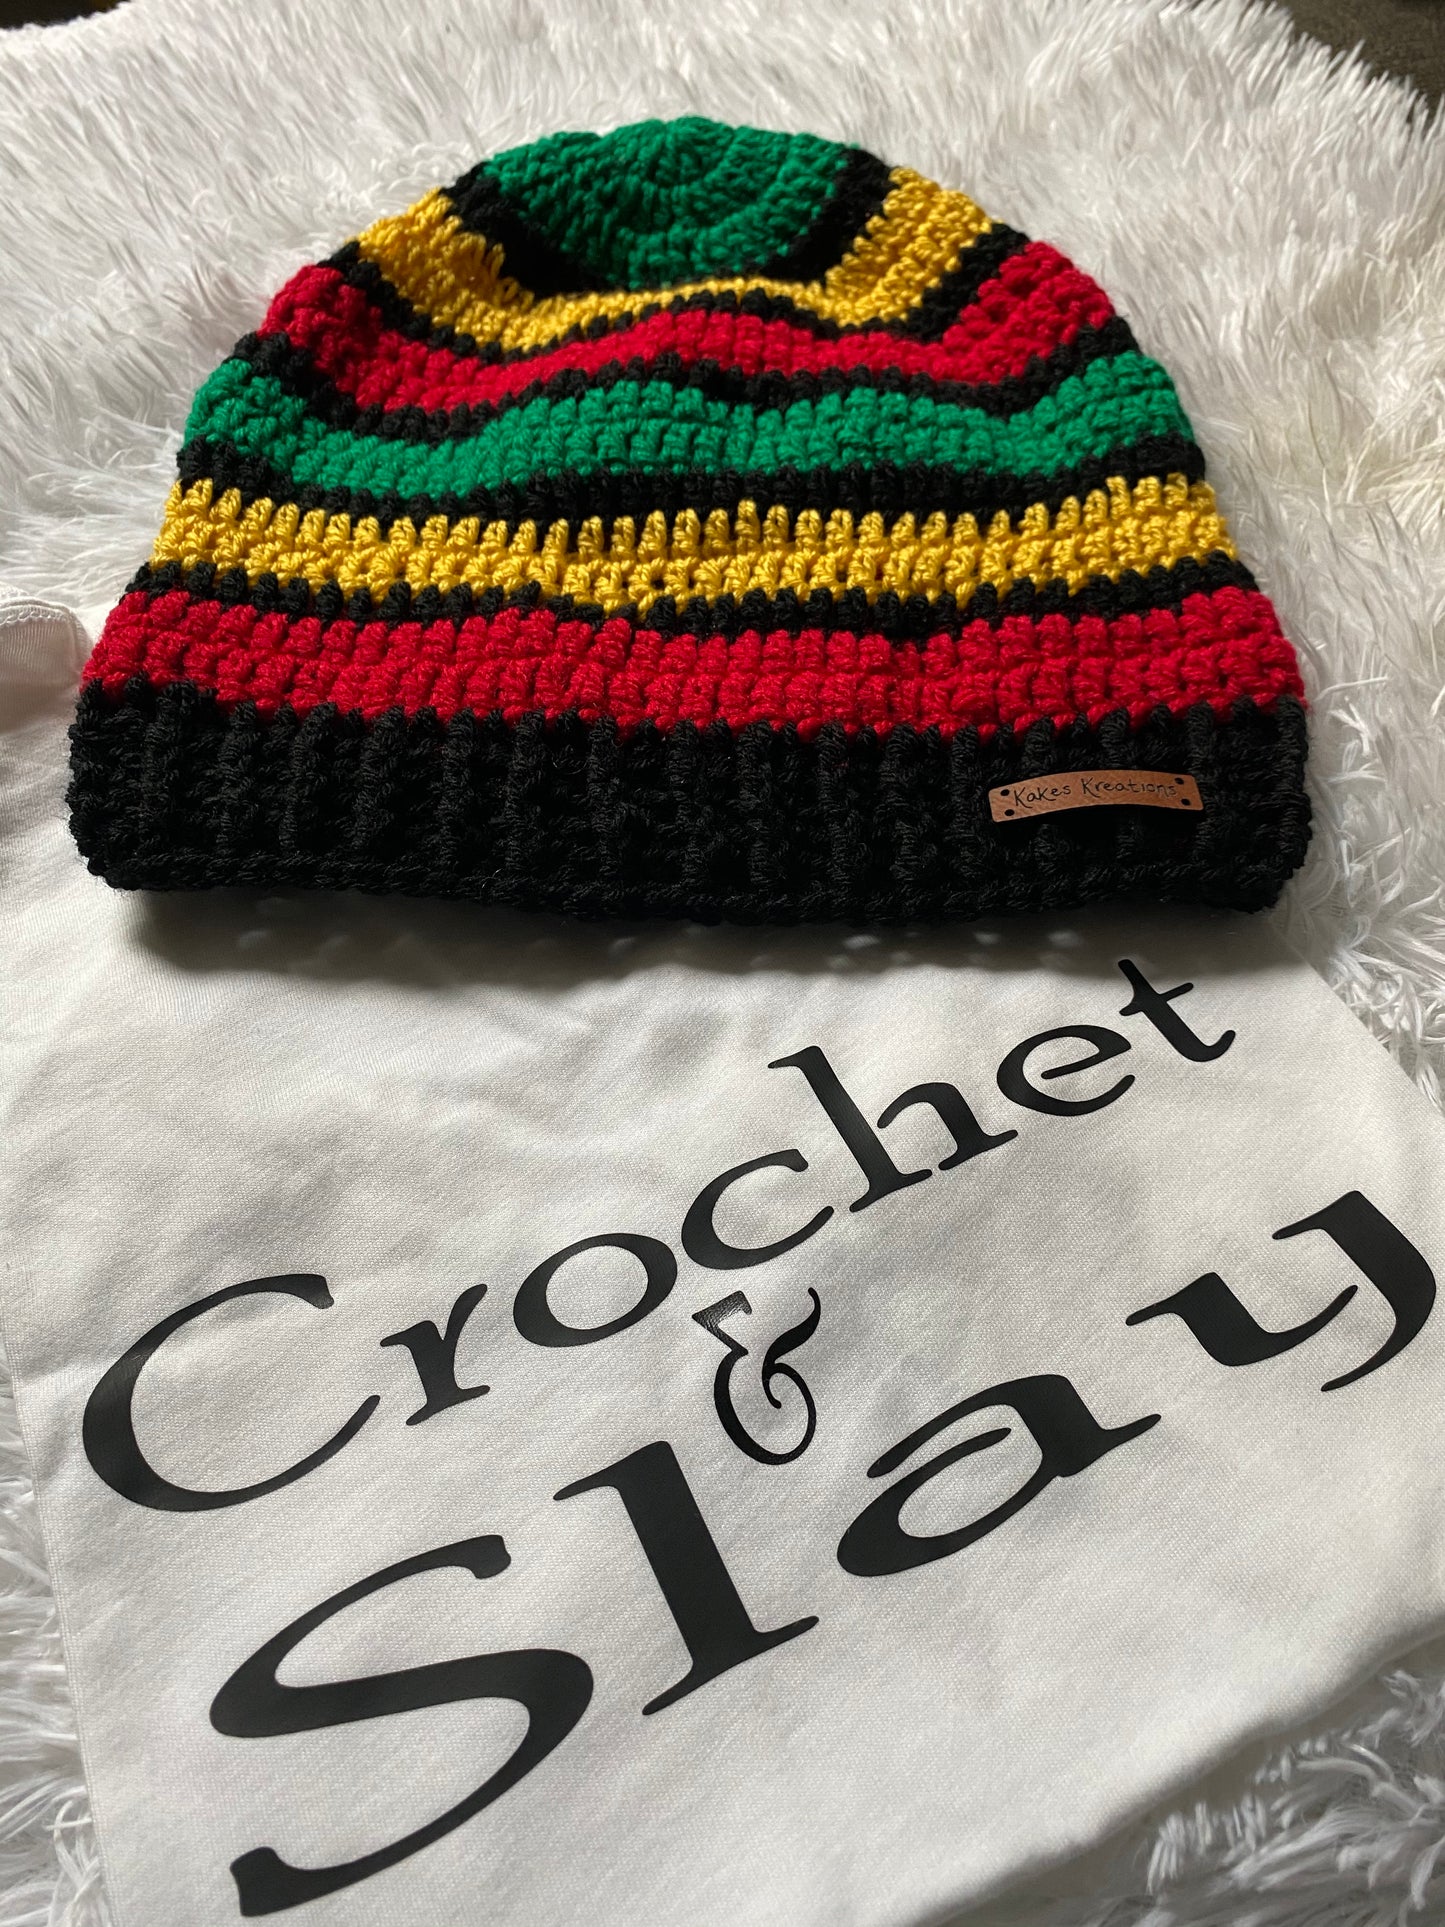 Original Crochet & Slay tee